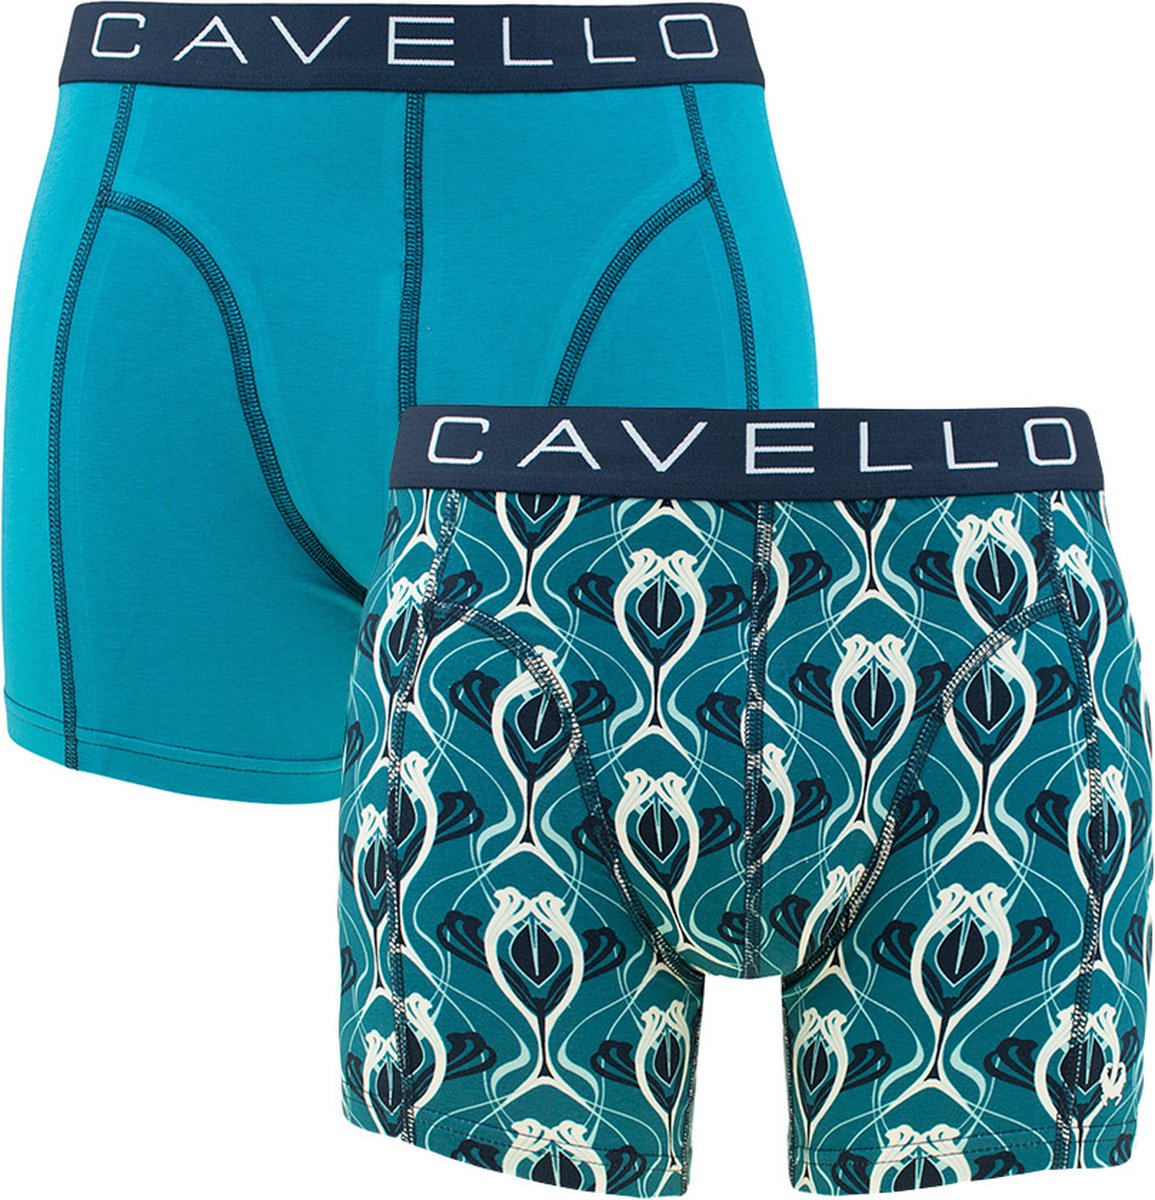 Cavello Boxershorts 2-pack Petrol